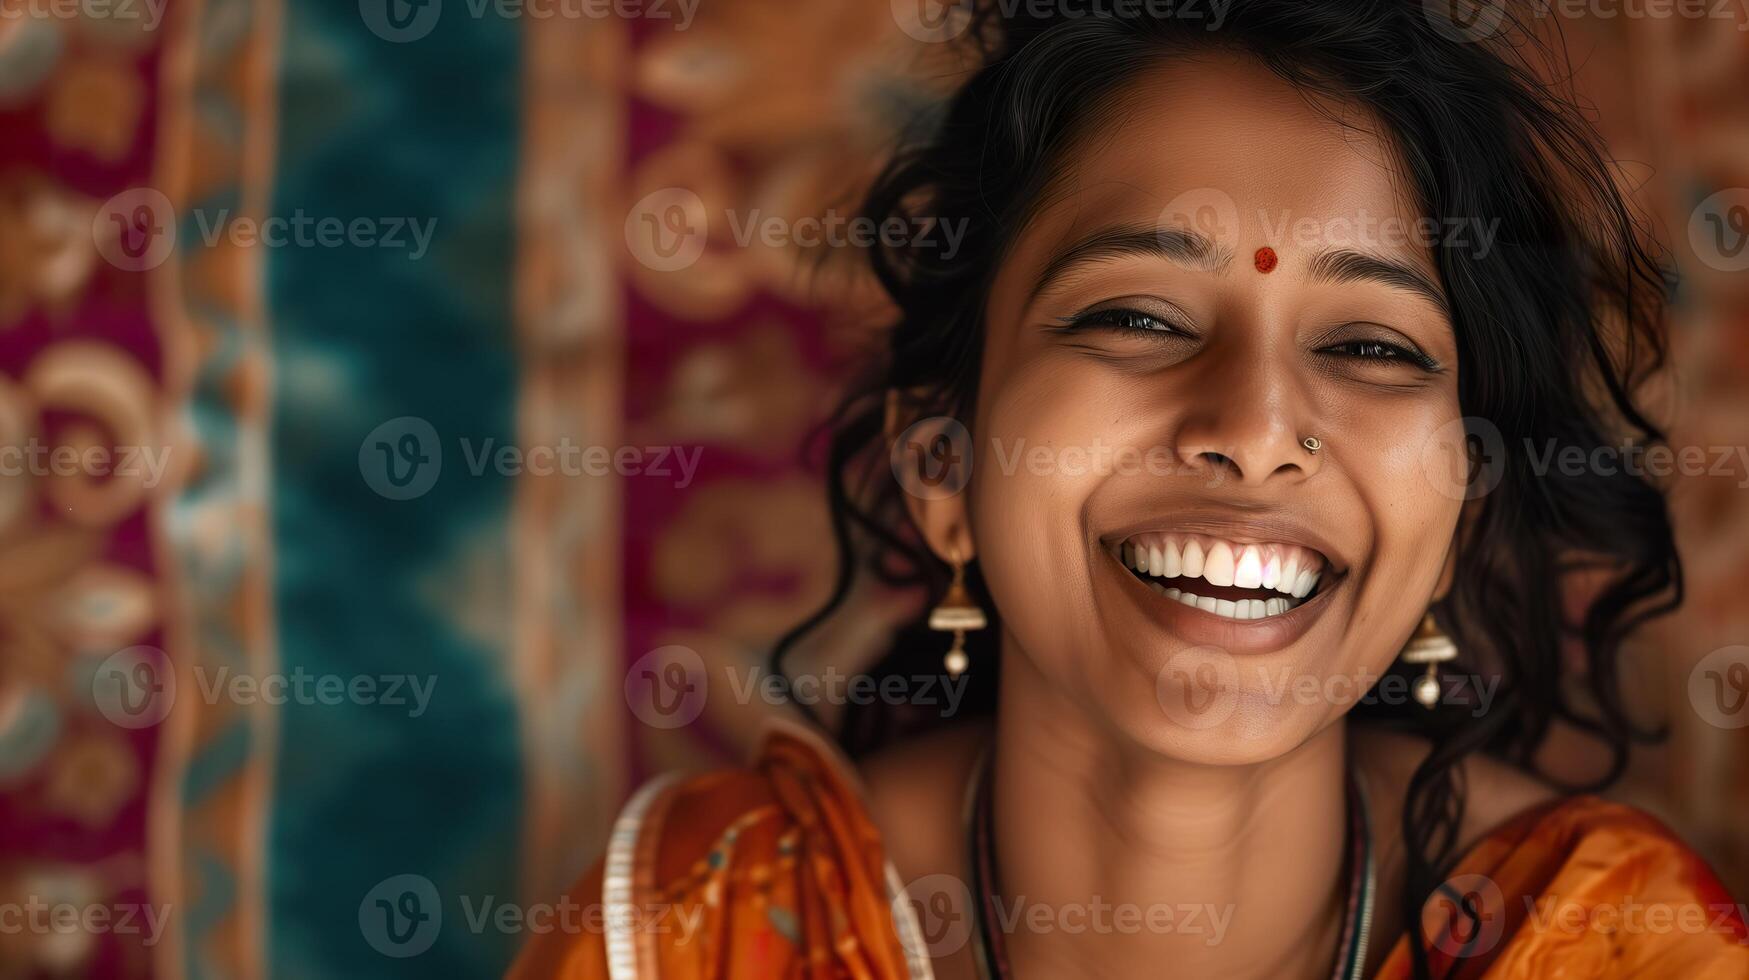 AI generated Smiley Indian Woman, Radiating Joy in a Medium Shot photo